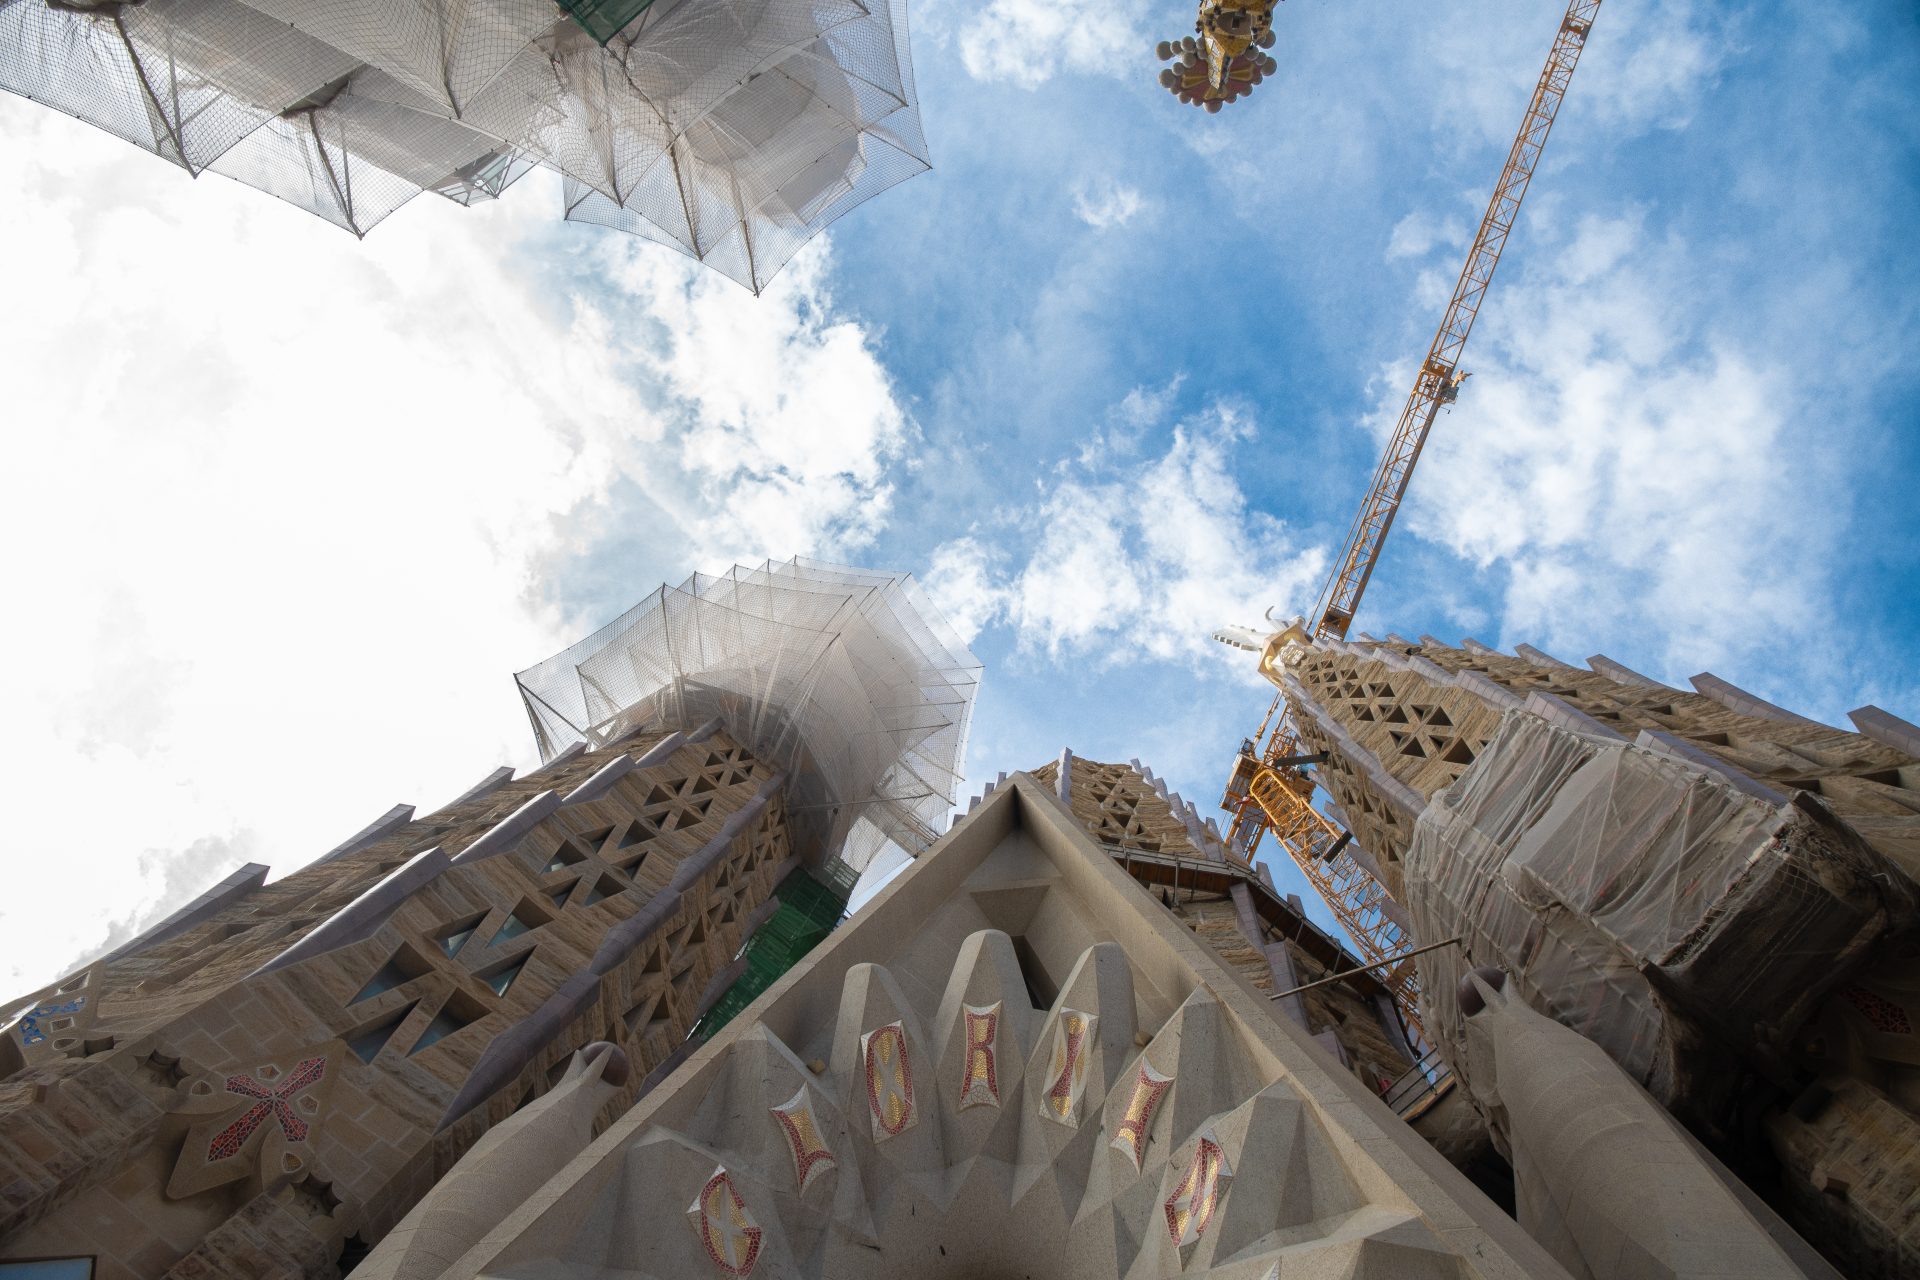 The Sagrada Familia takes its time